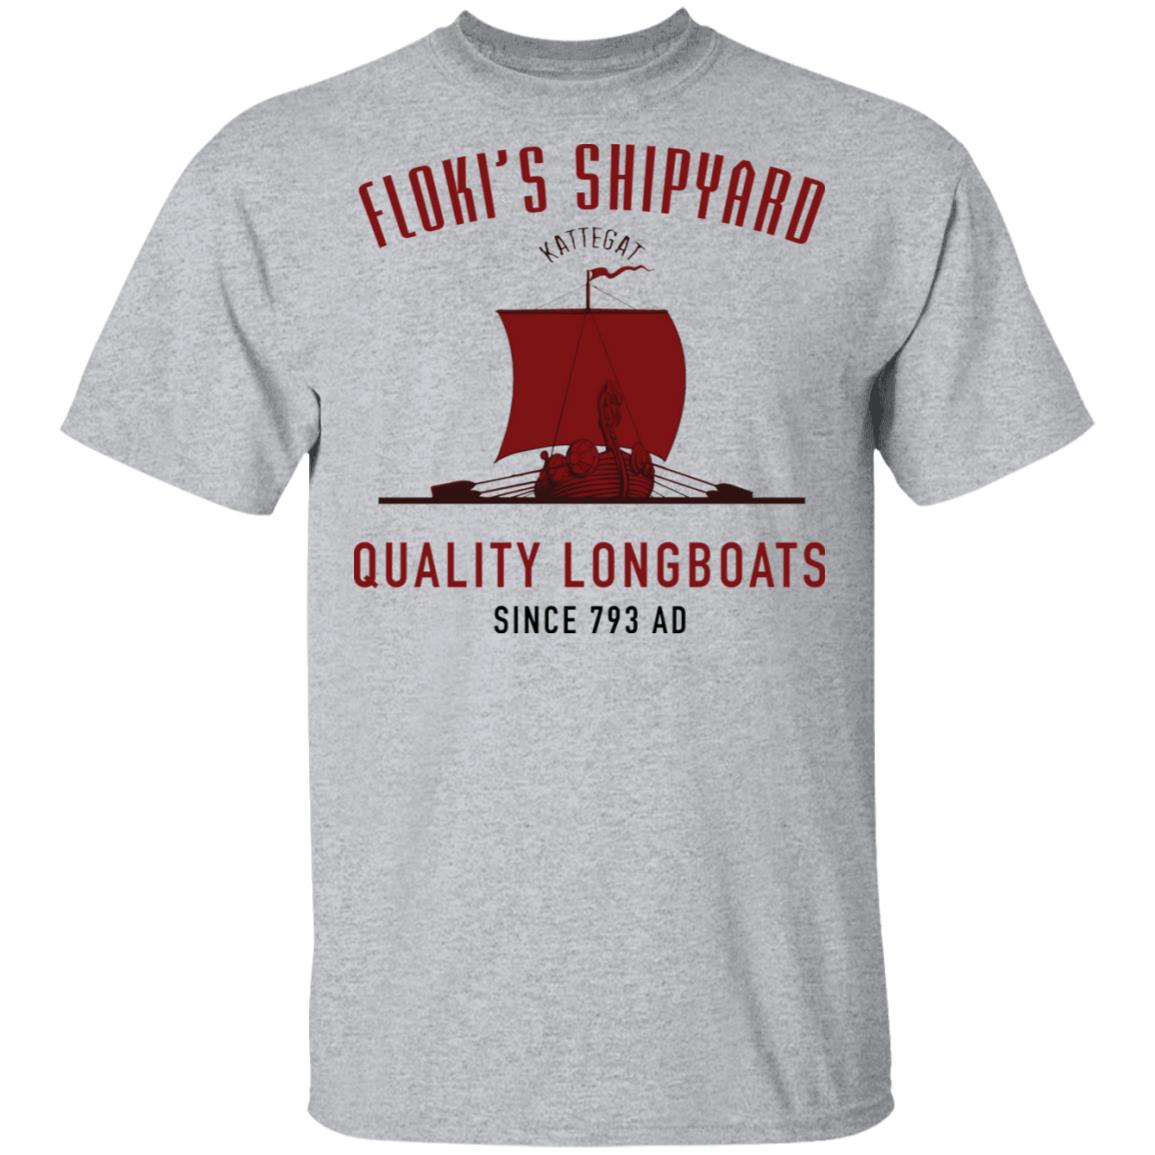 Kattegat Floki's Shipyard Quality Longboats Since 793 Ad shirt - Rockatee